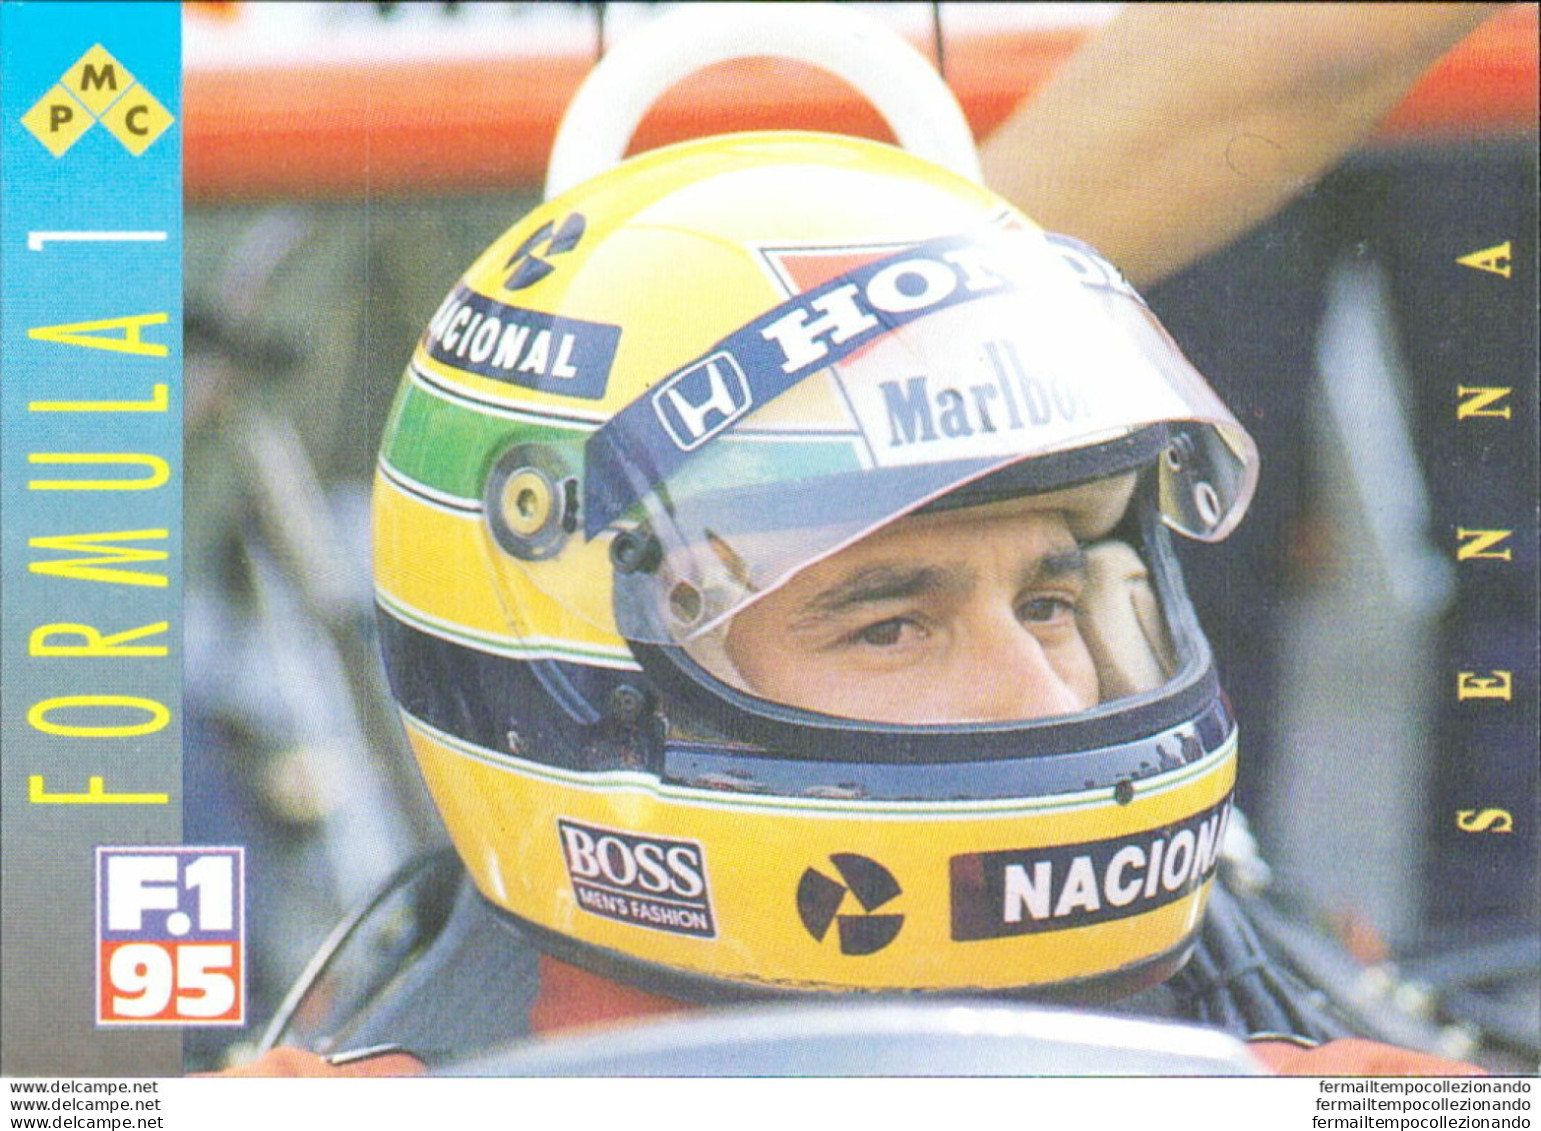 Bh37 1995 Formula 1 Gran Prix Collection Card Senna N 37 - Catalogus